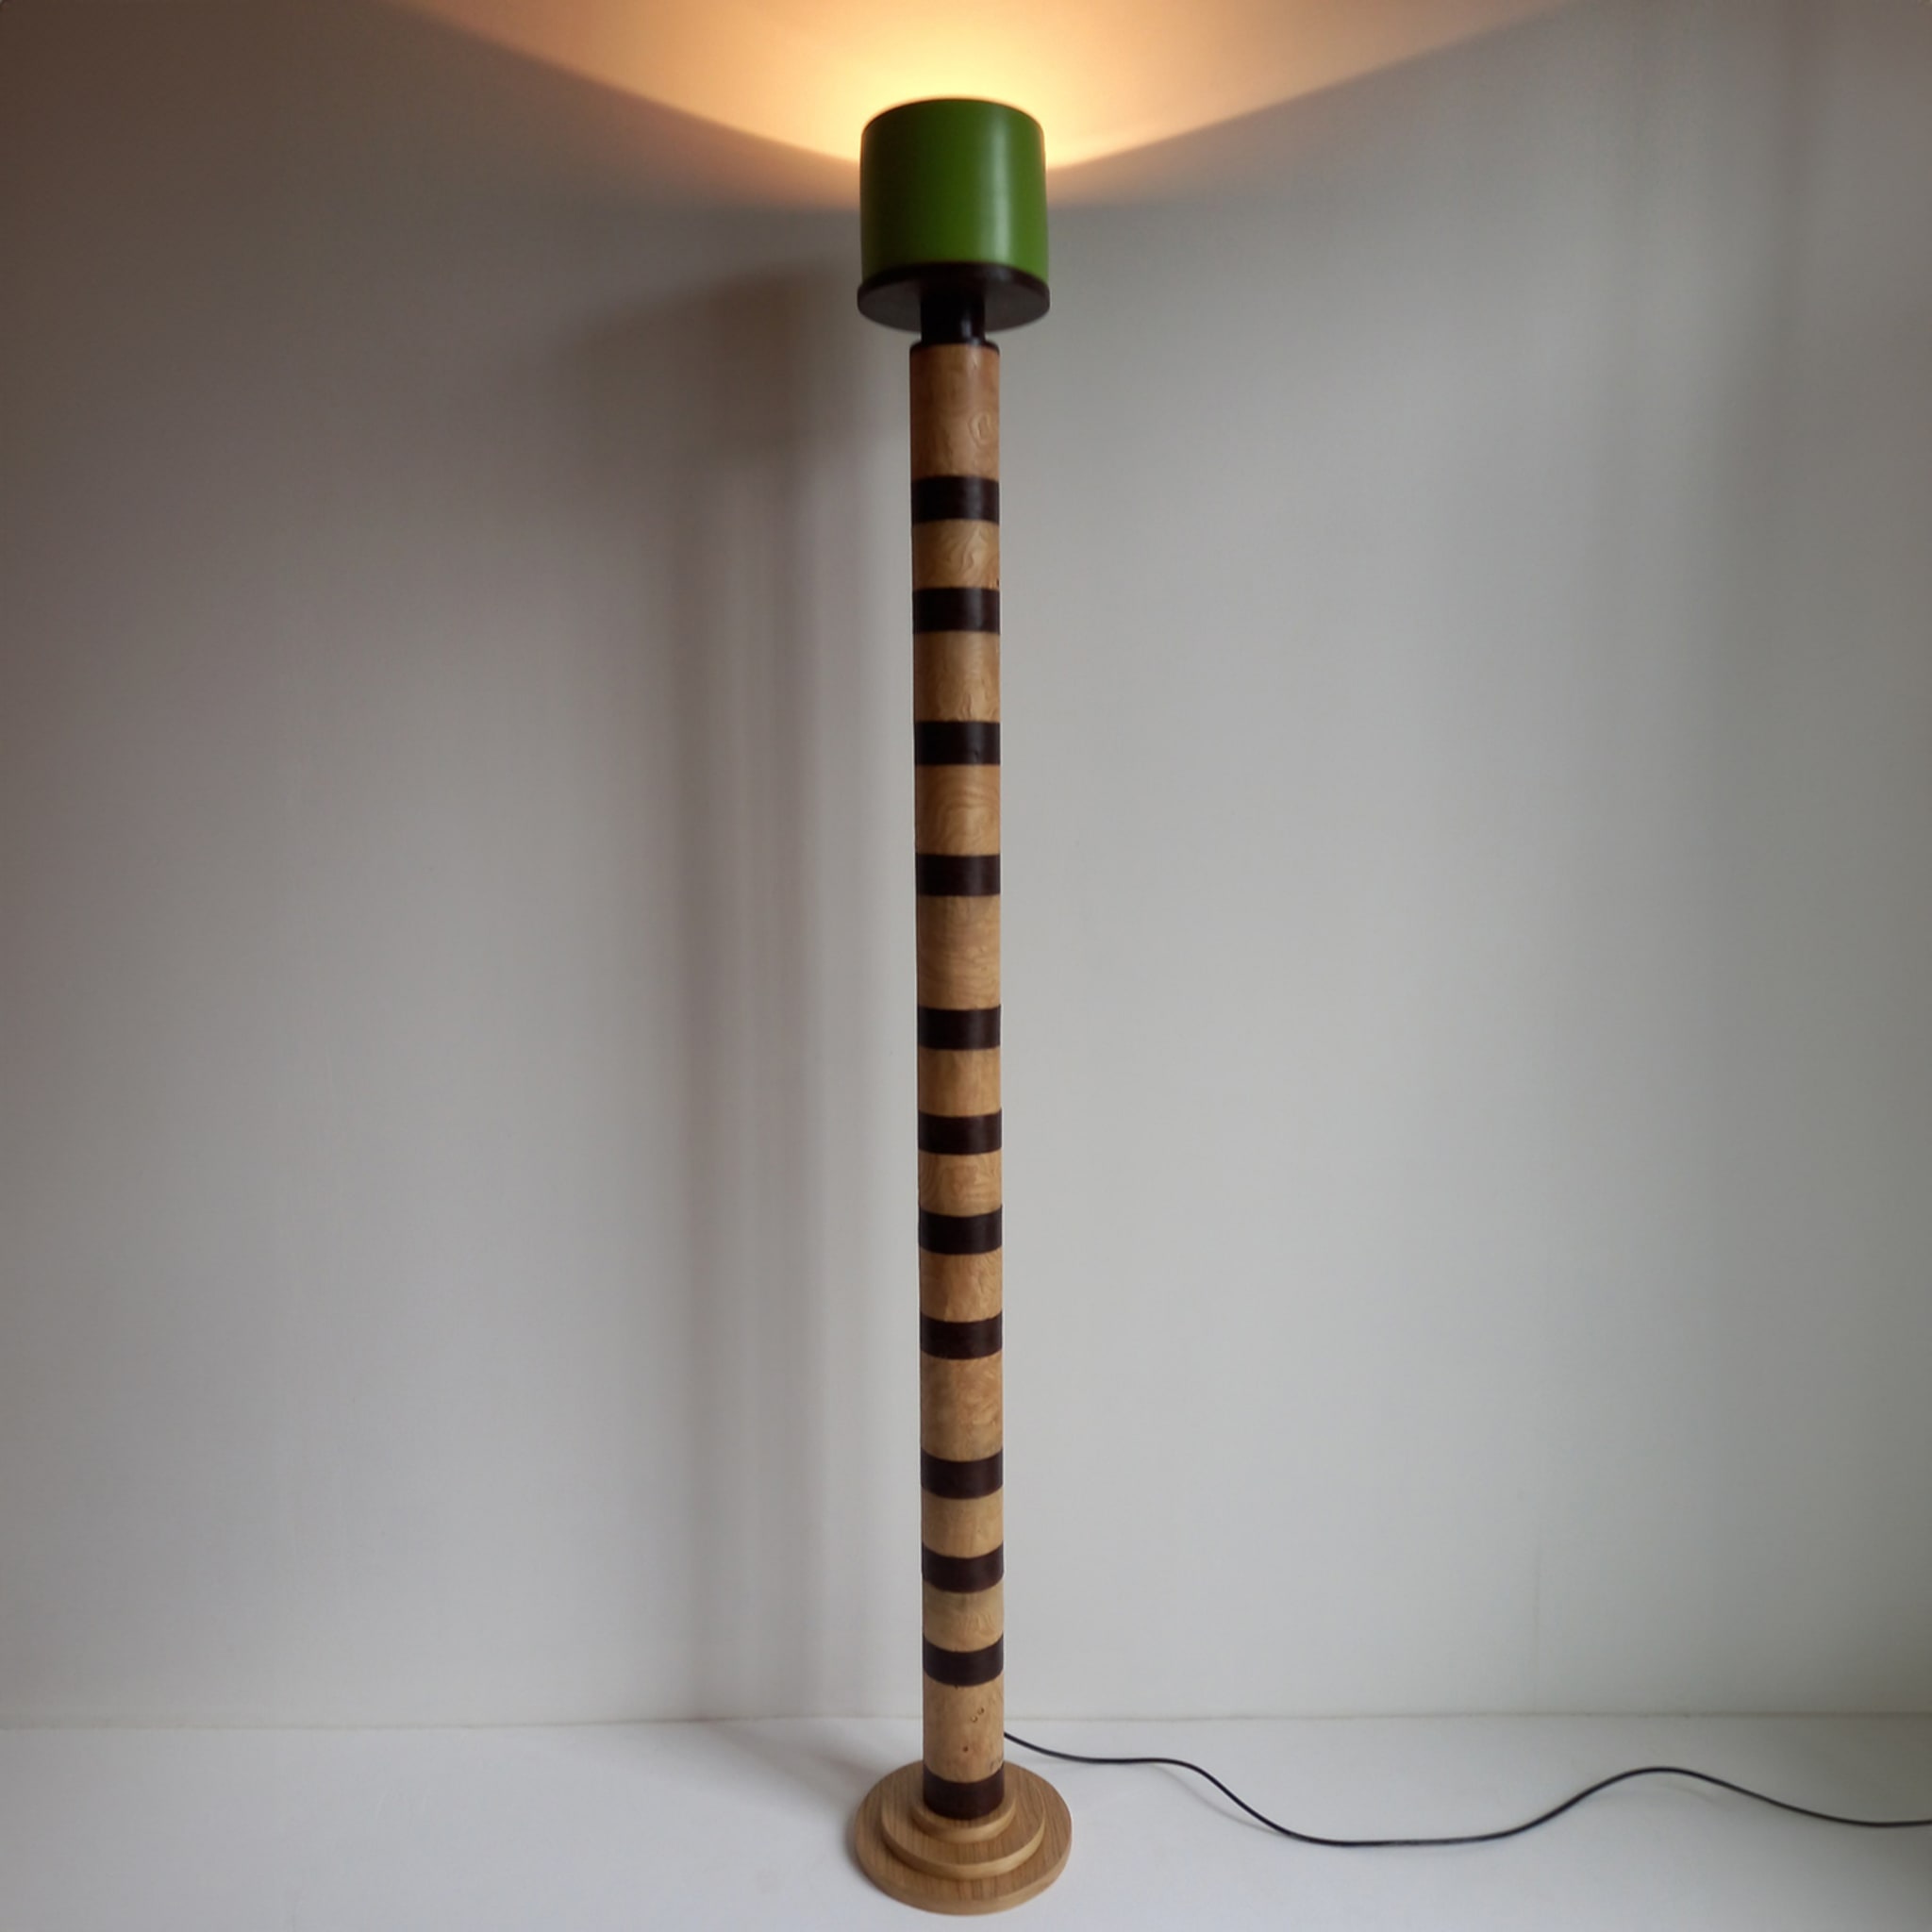 Dorica Green Floor Lamp by Pietro Meccani - Alternative view 3